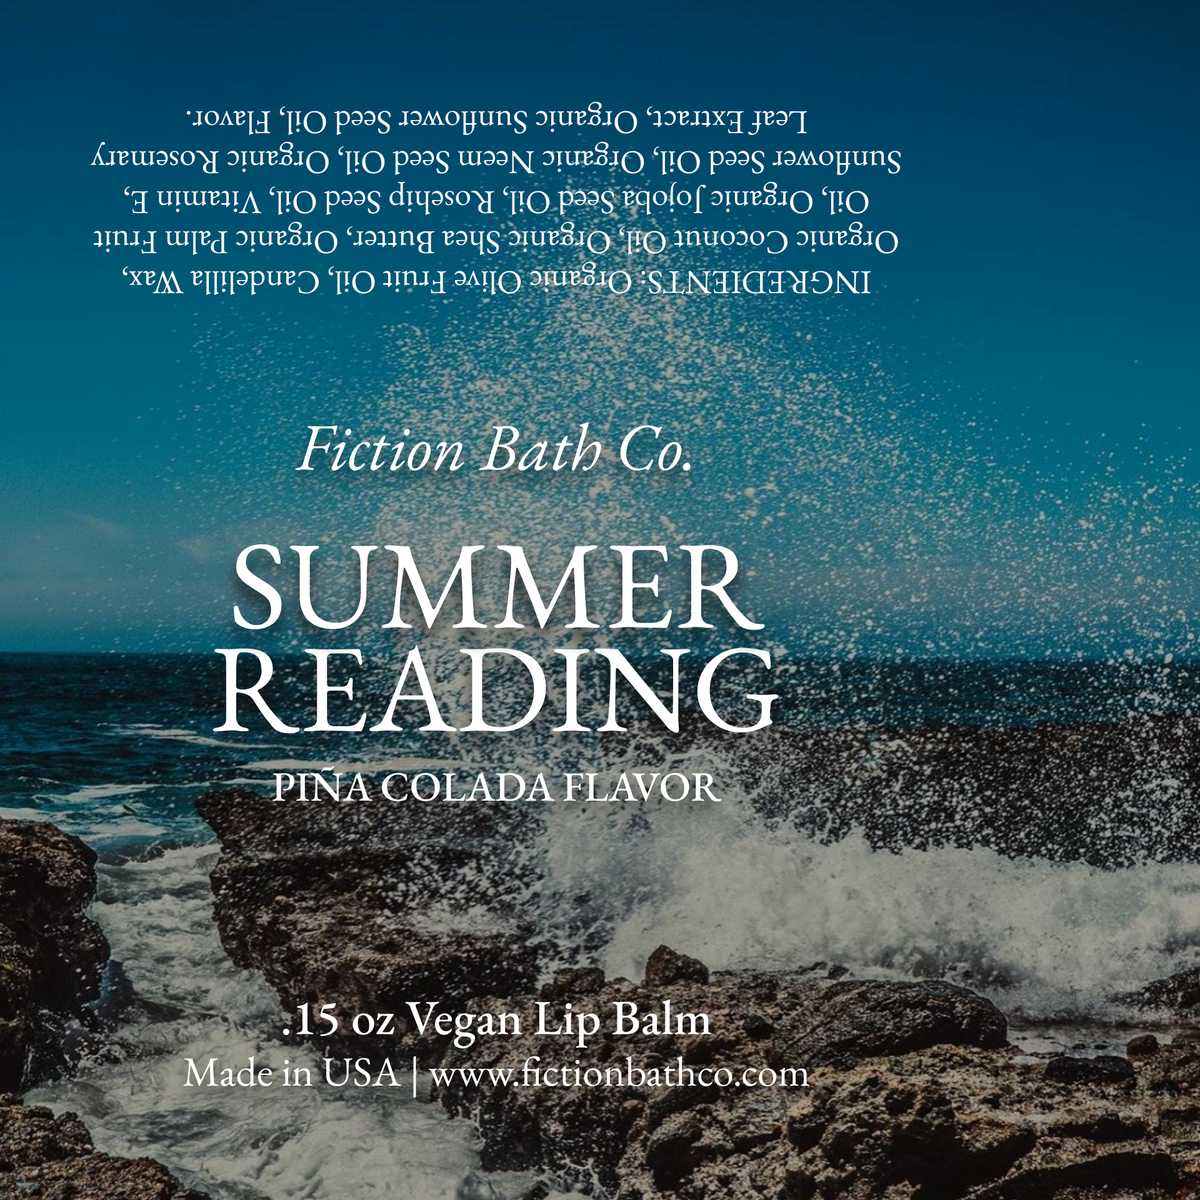 SUMMER READING Vegan Lip Balm – Fiction Bath Co.